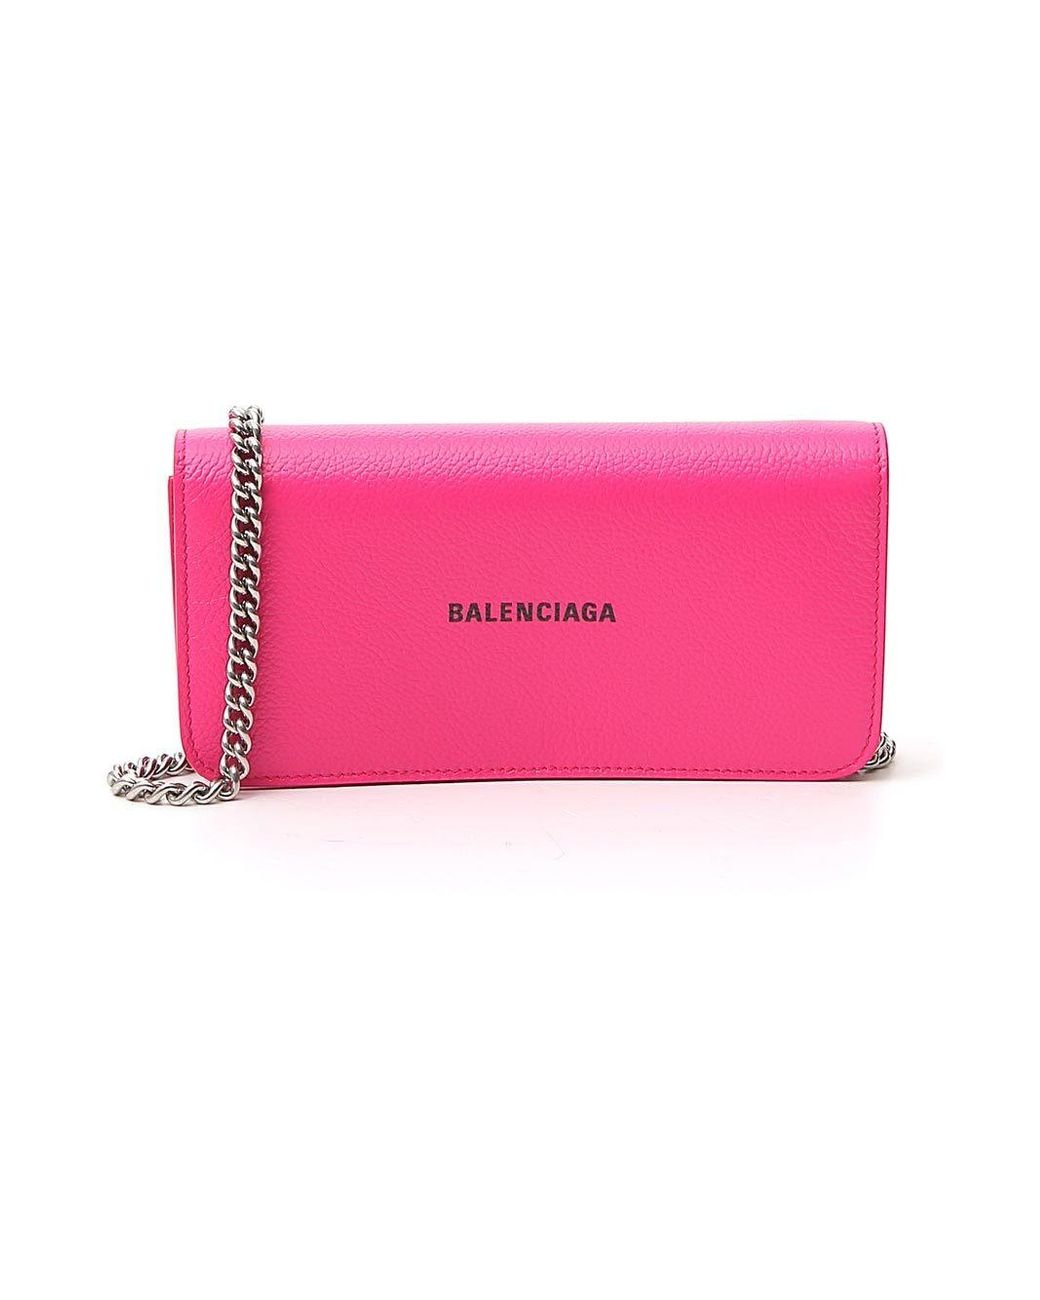 Balenciaga Logo Chain Wallet in Pink | Lyst